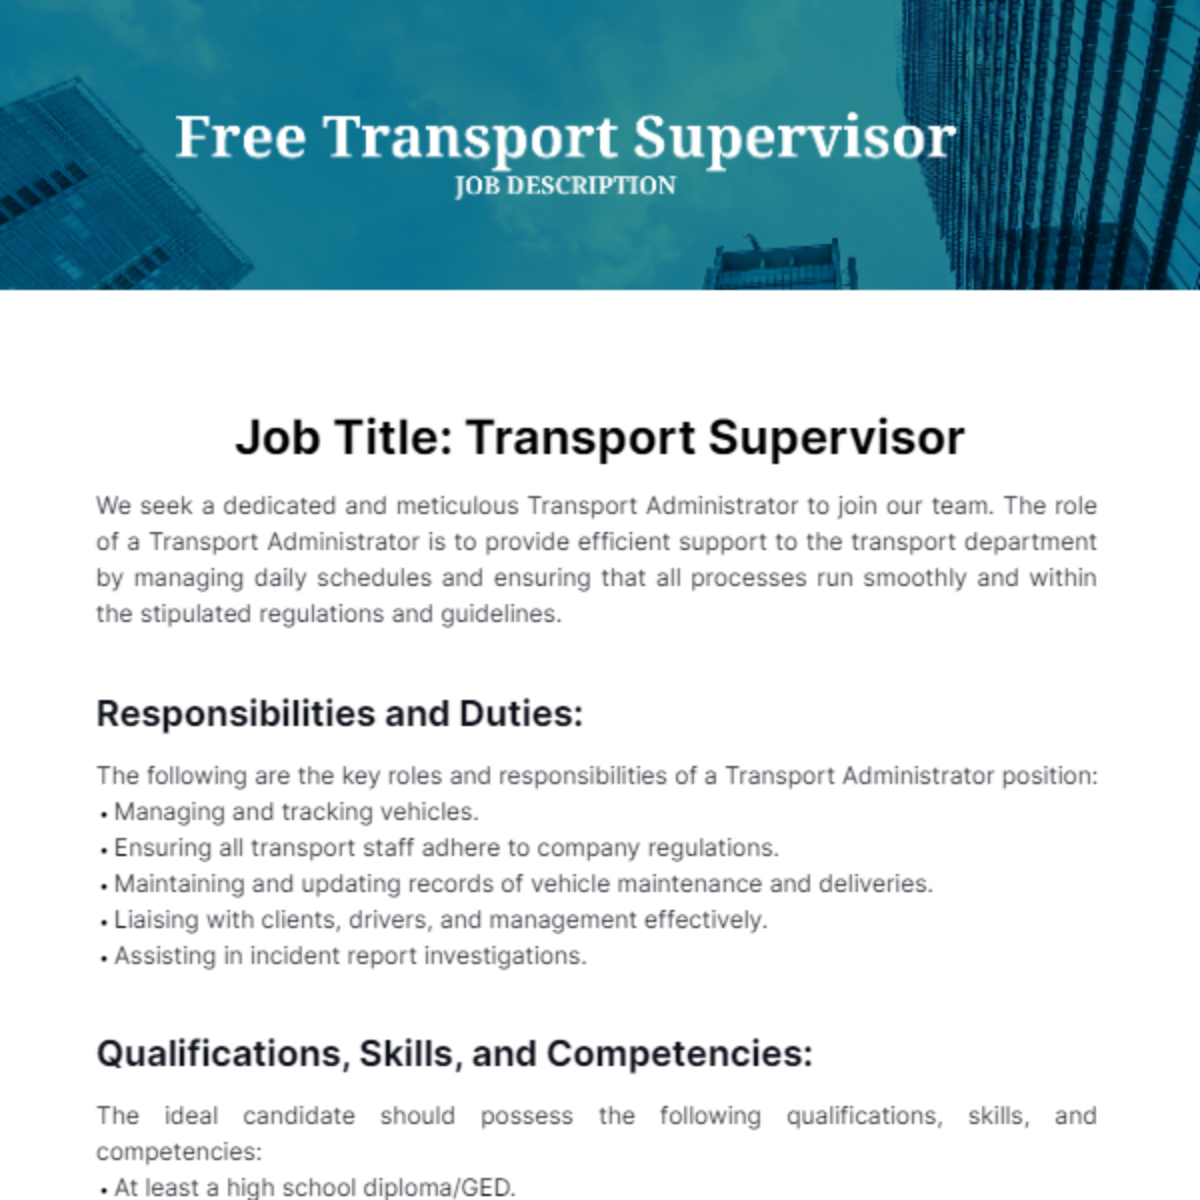 Transport Supervisor Job Description Template